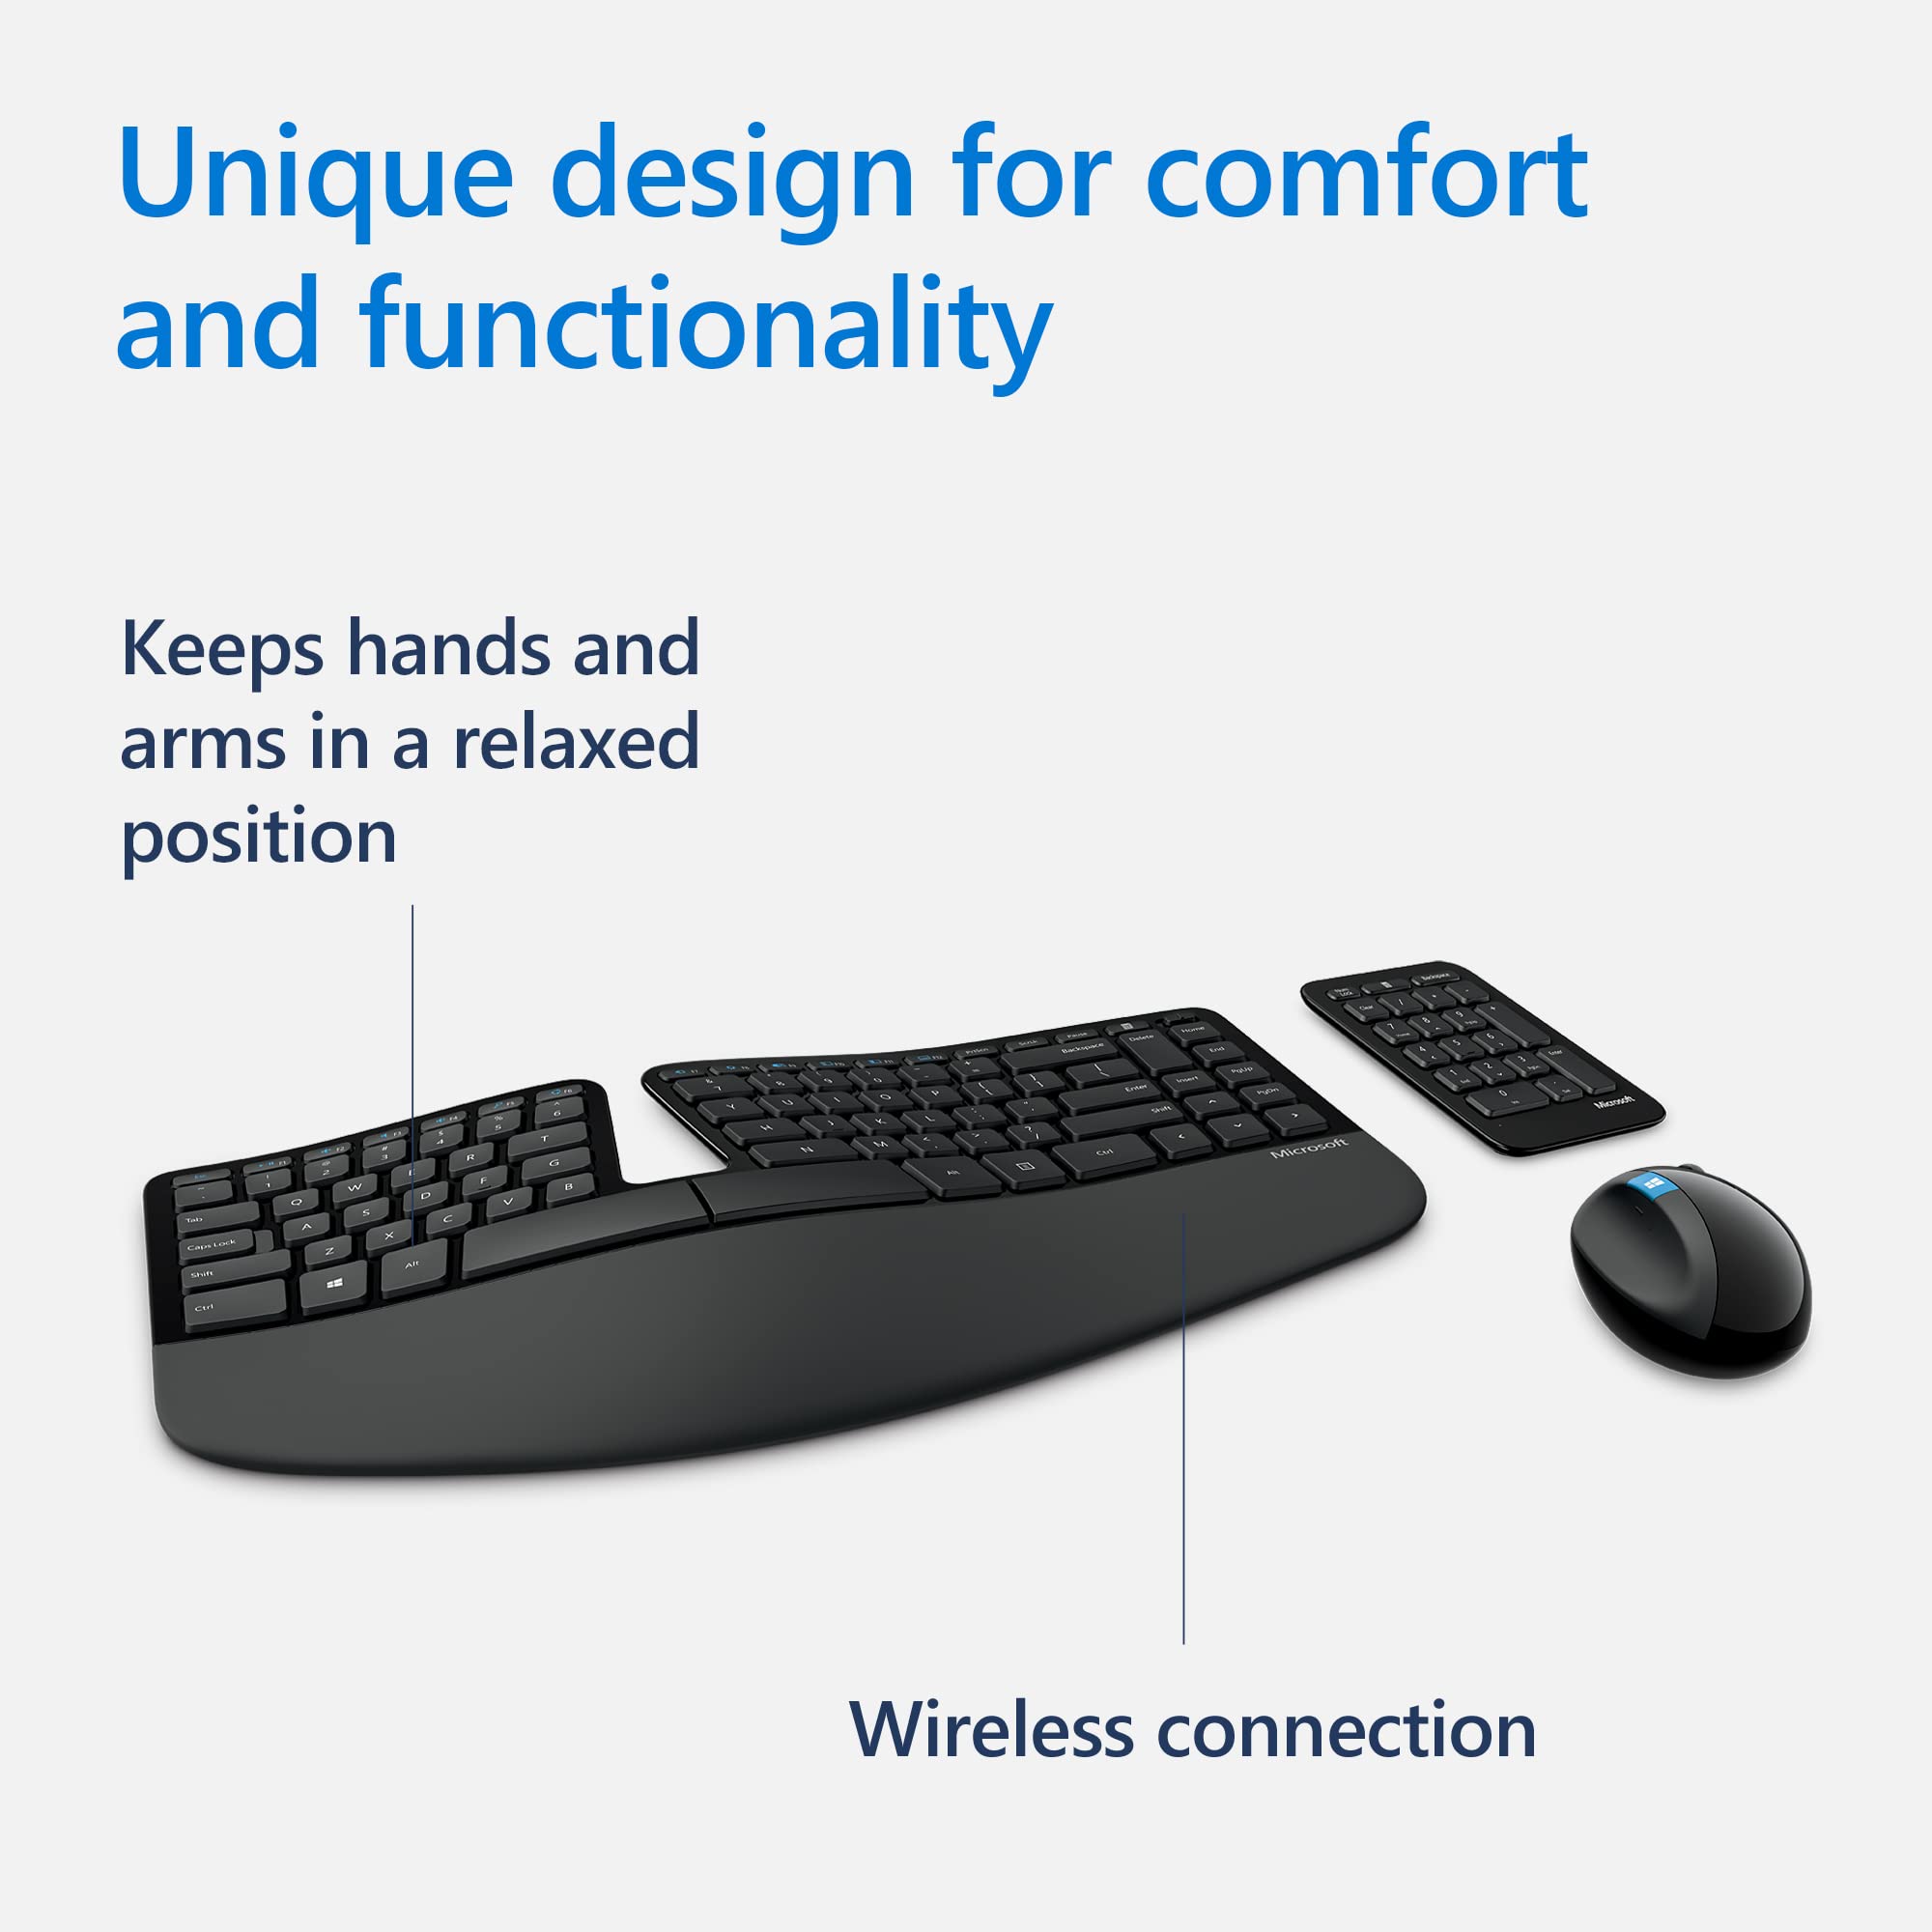 Microsoft Sculpt Ergonomic Wireless Desktop Keyboard and Mouse - Black. Wireless , Comfortable, Ergonomic Keyboard and Mouse Combo with Split Design and Palm Rest.